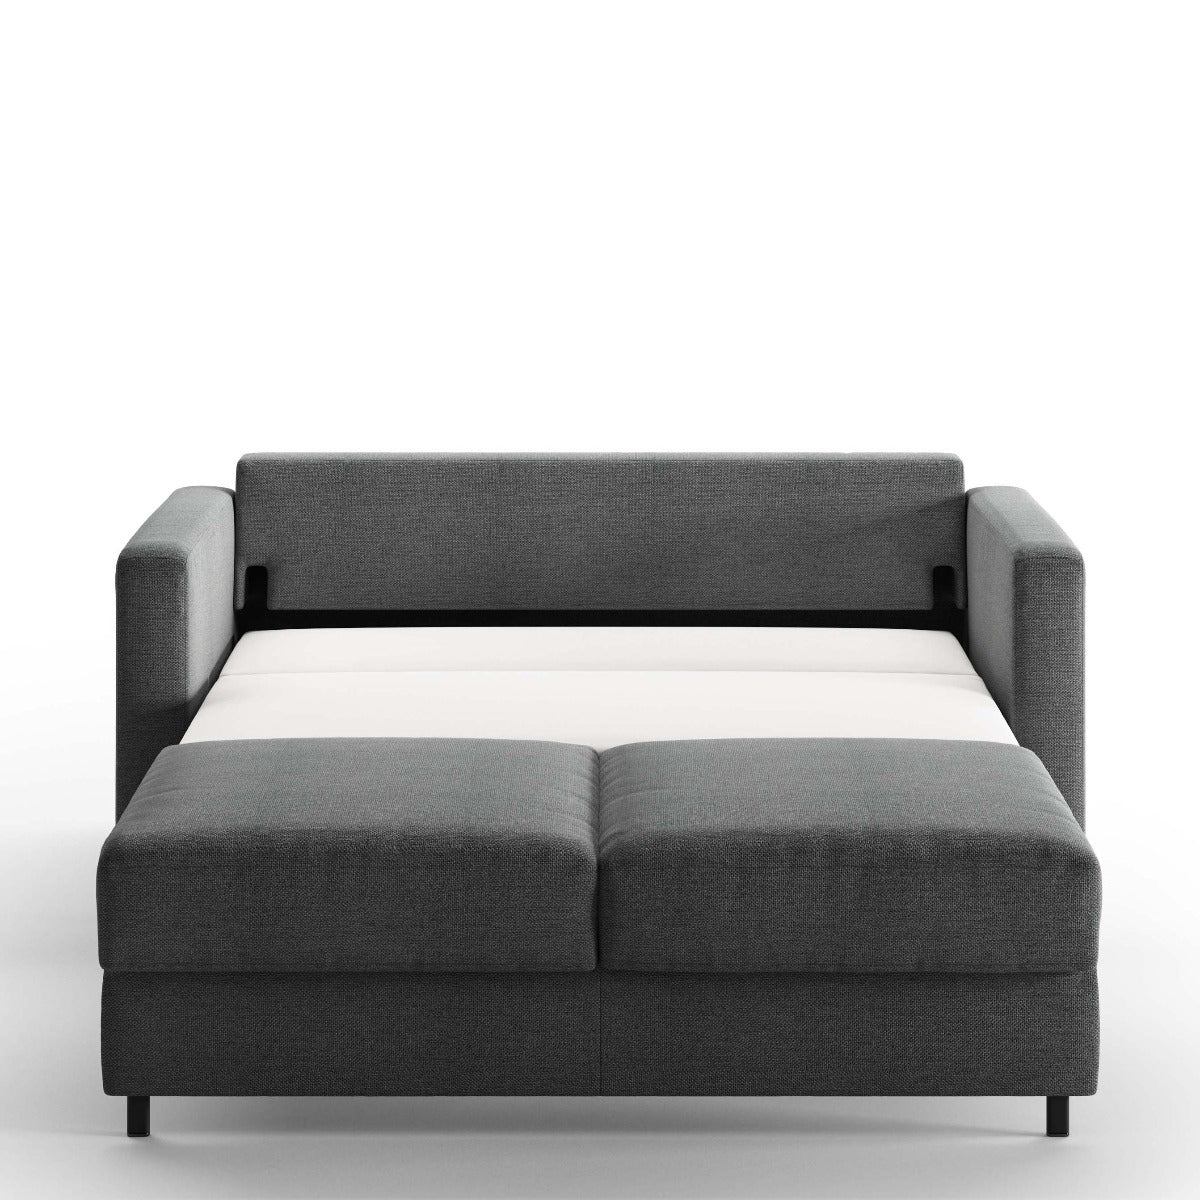 Luonto Furniture Fantasy Full XL Loveseat Sleeper - Fun 481 - 217/6 Chrome